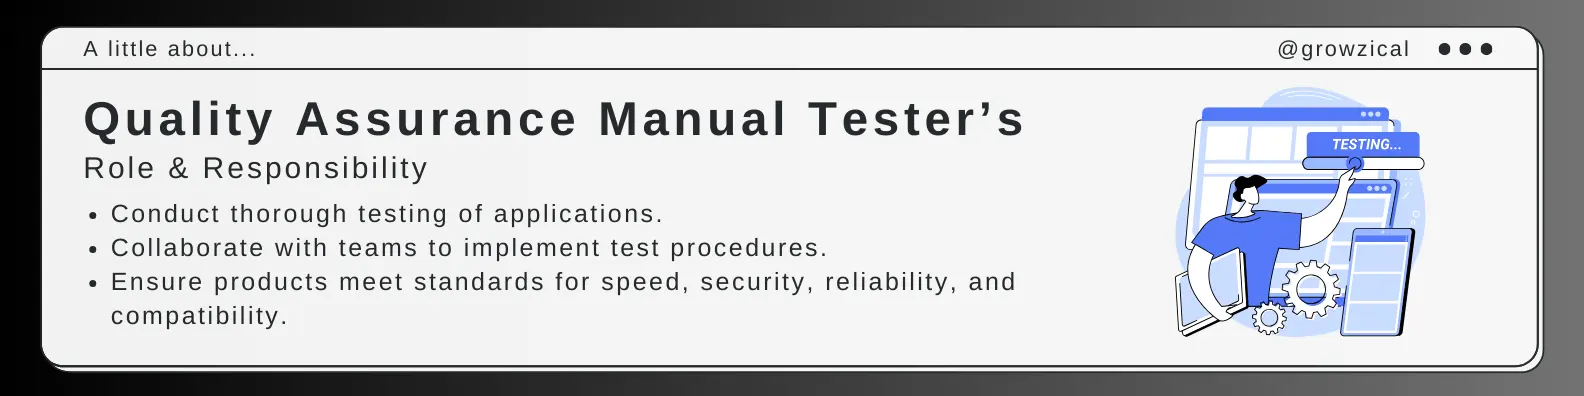 jpmc quality assurance manual tester responsibilities